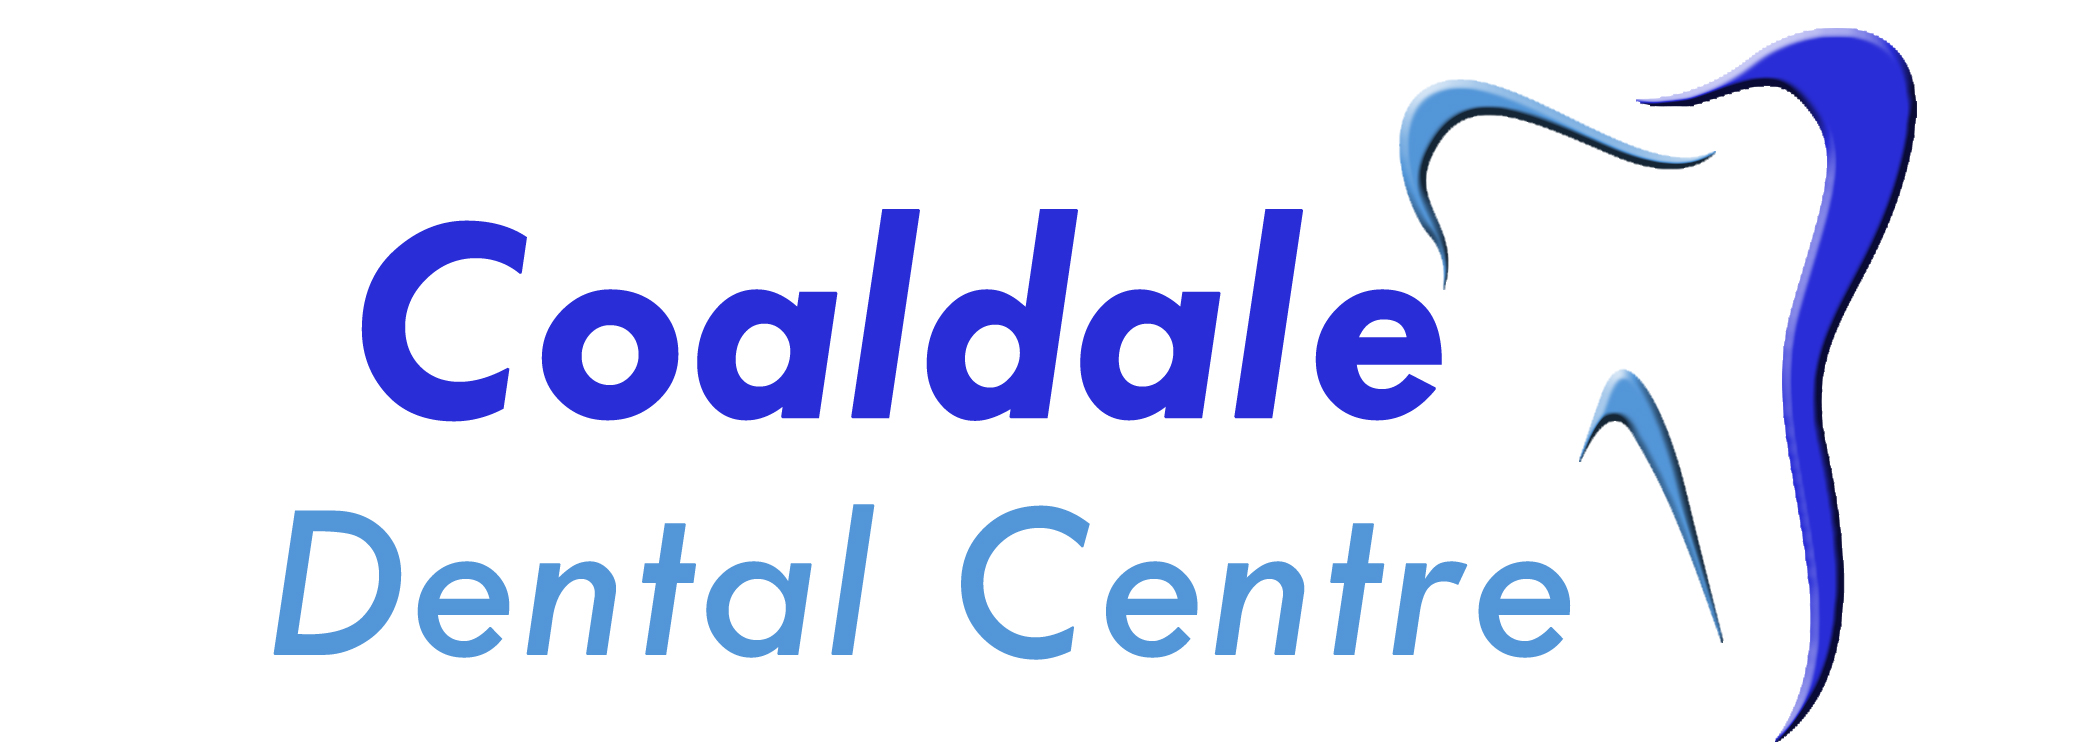 coaldale dental logo 2015